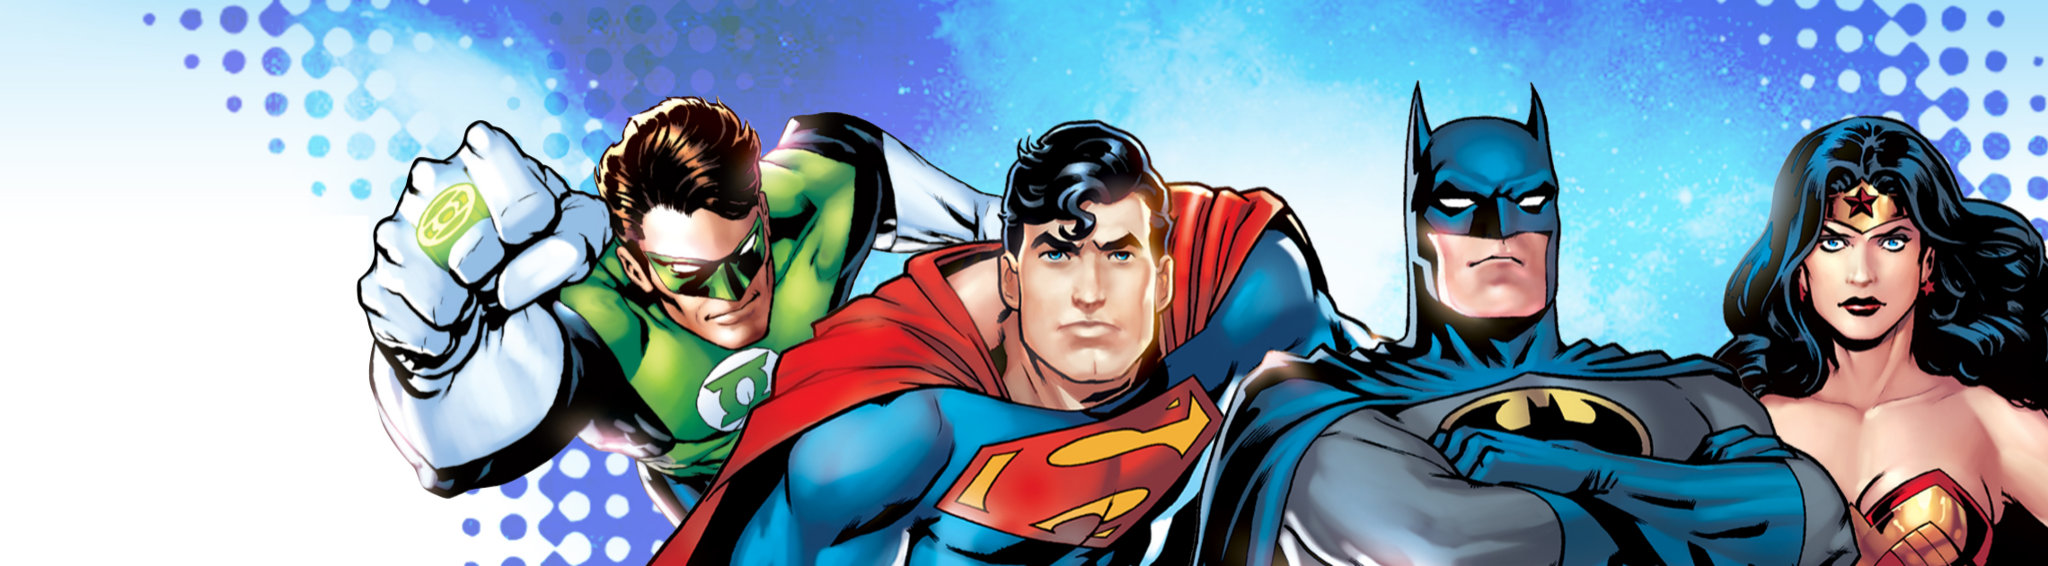 DC Comics banner with Green Lantern, Superman, Batman and Wonderwoman